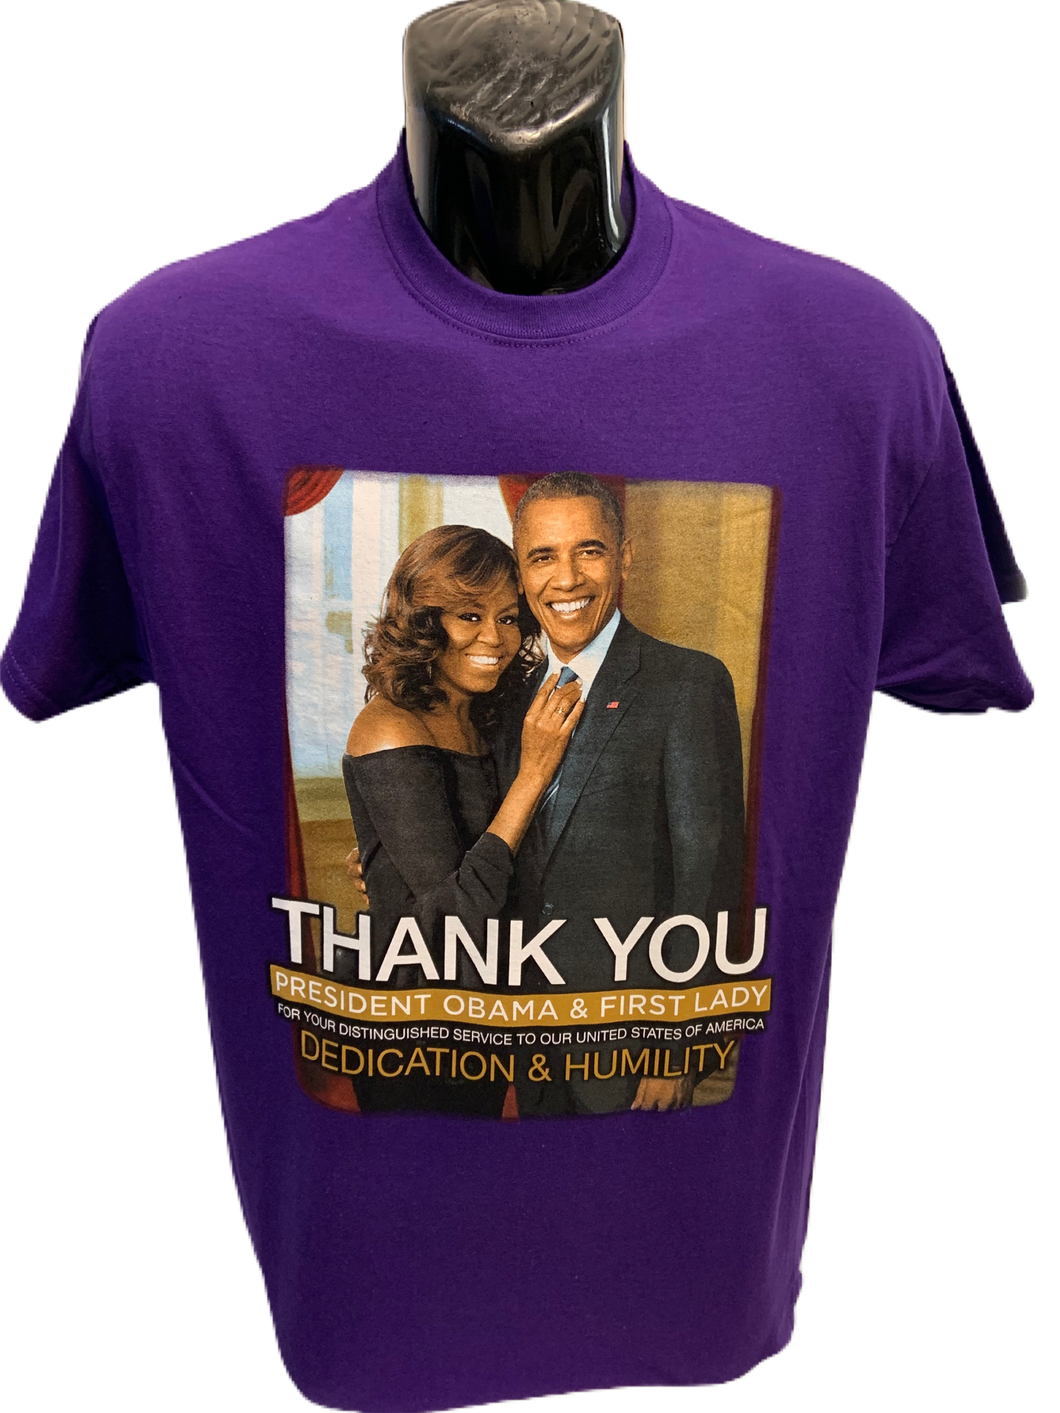 Thank you President Obama